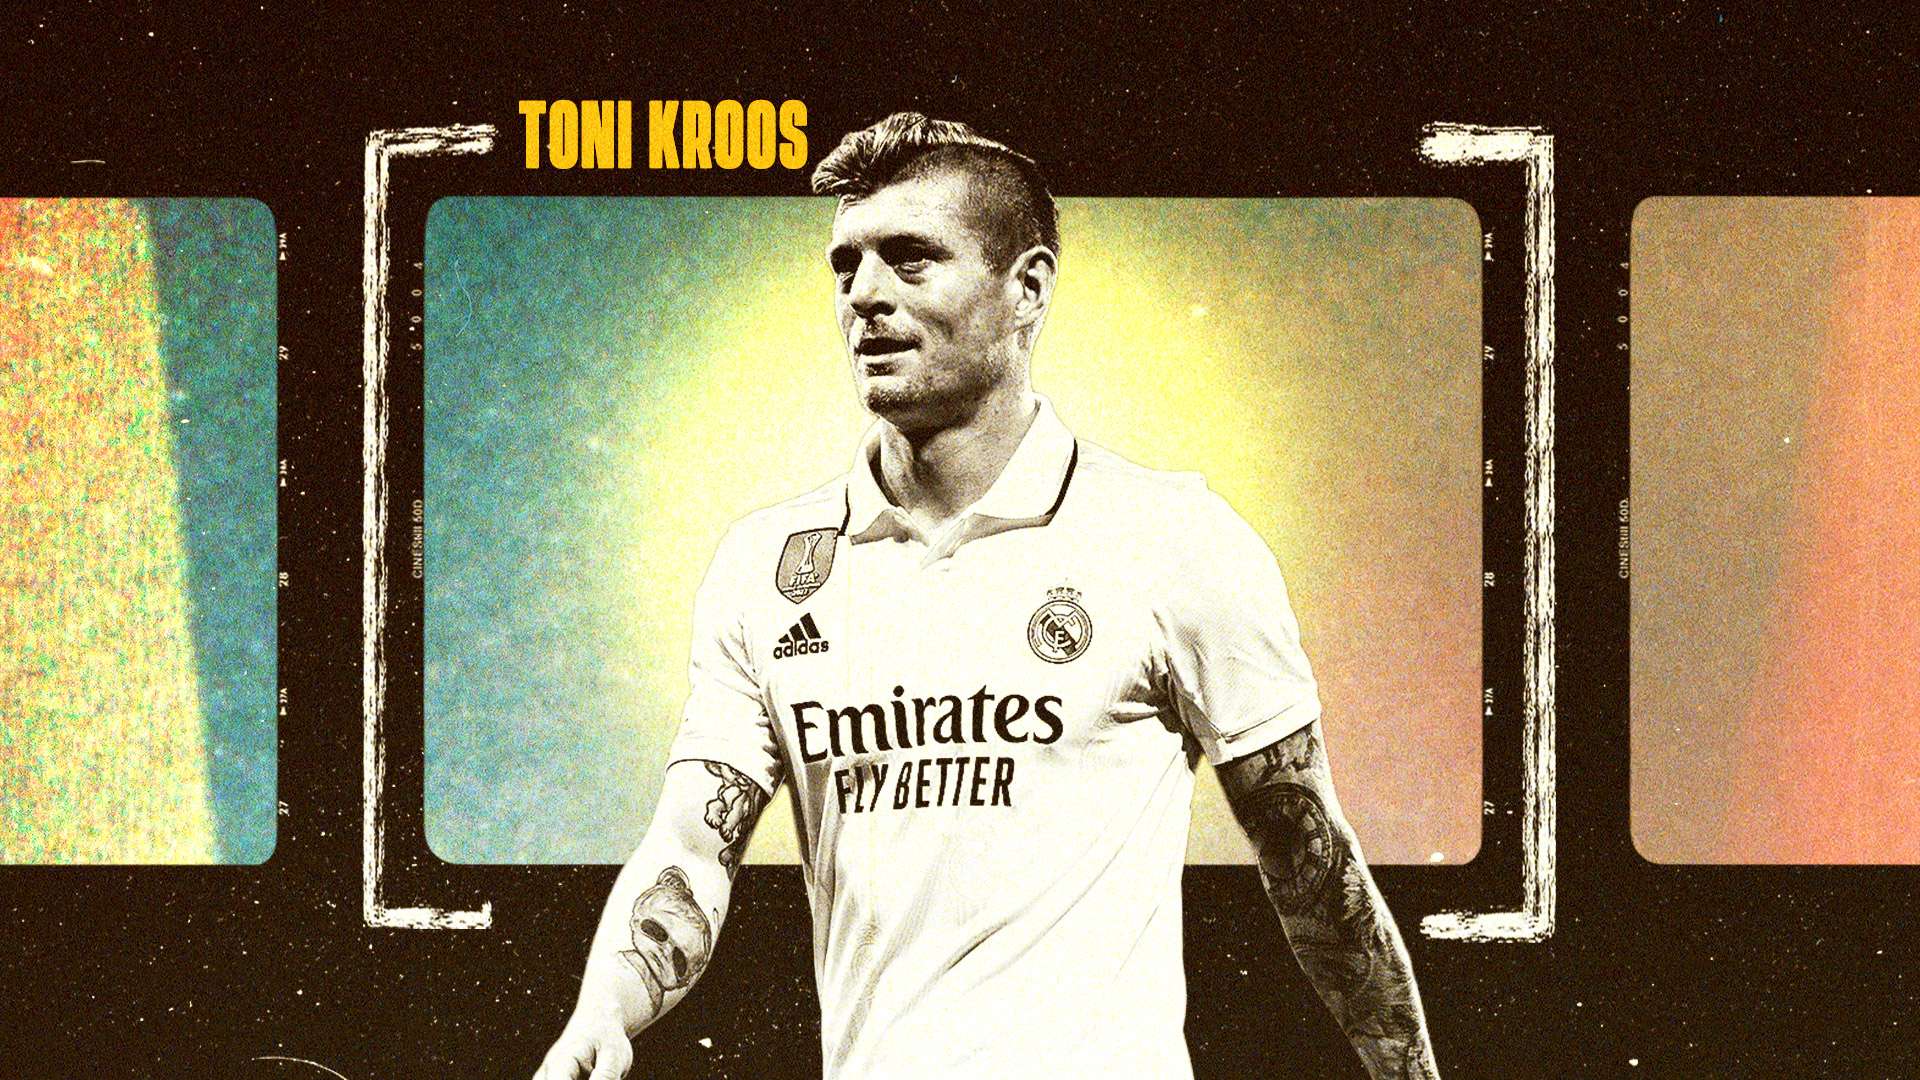 Toni Kroos World-Class Club GFX